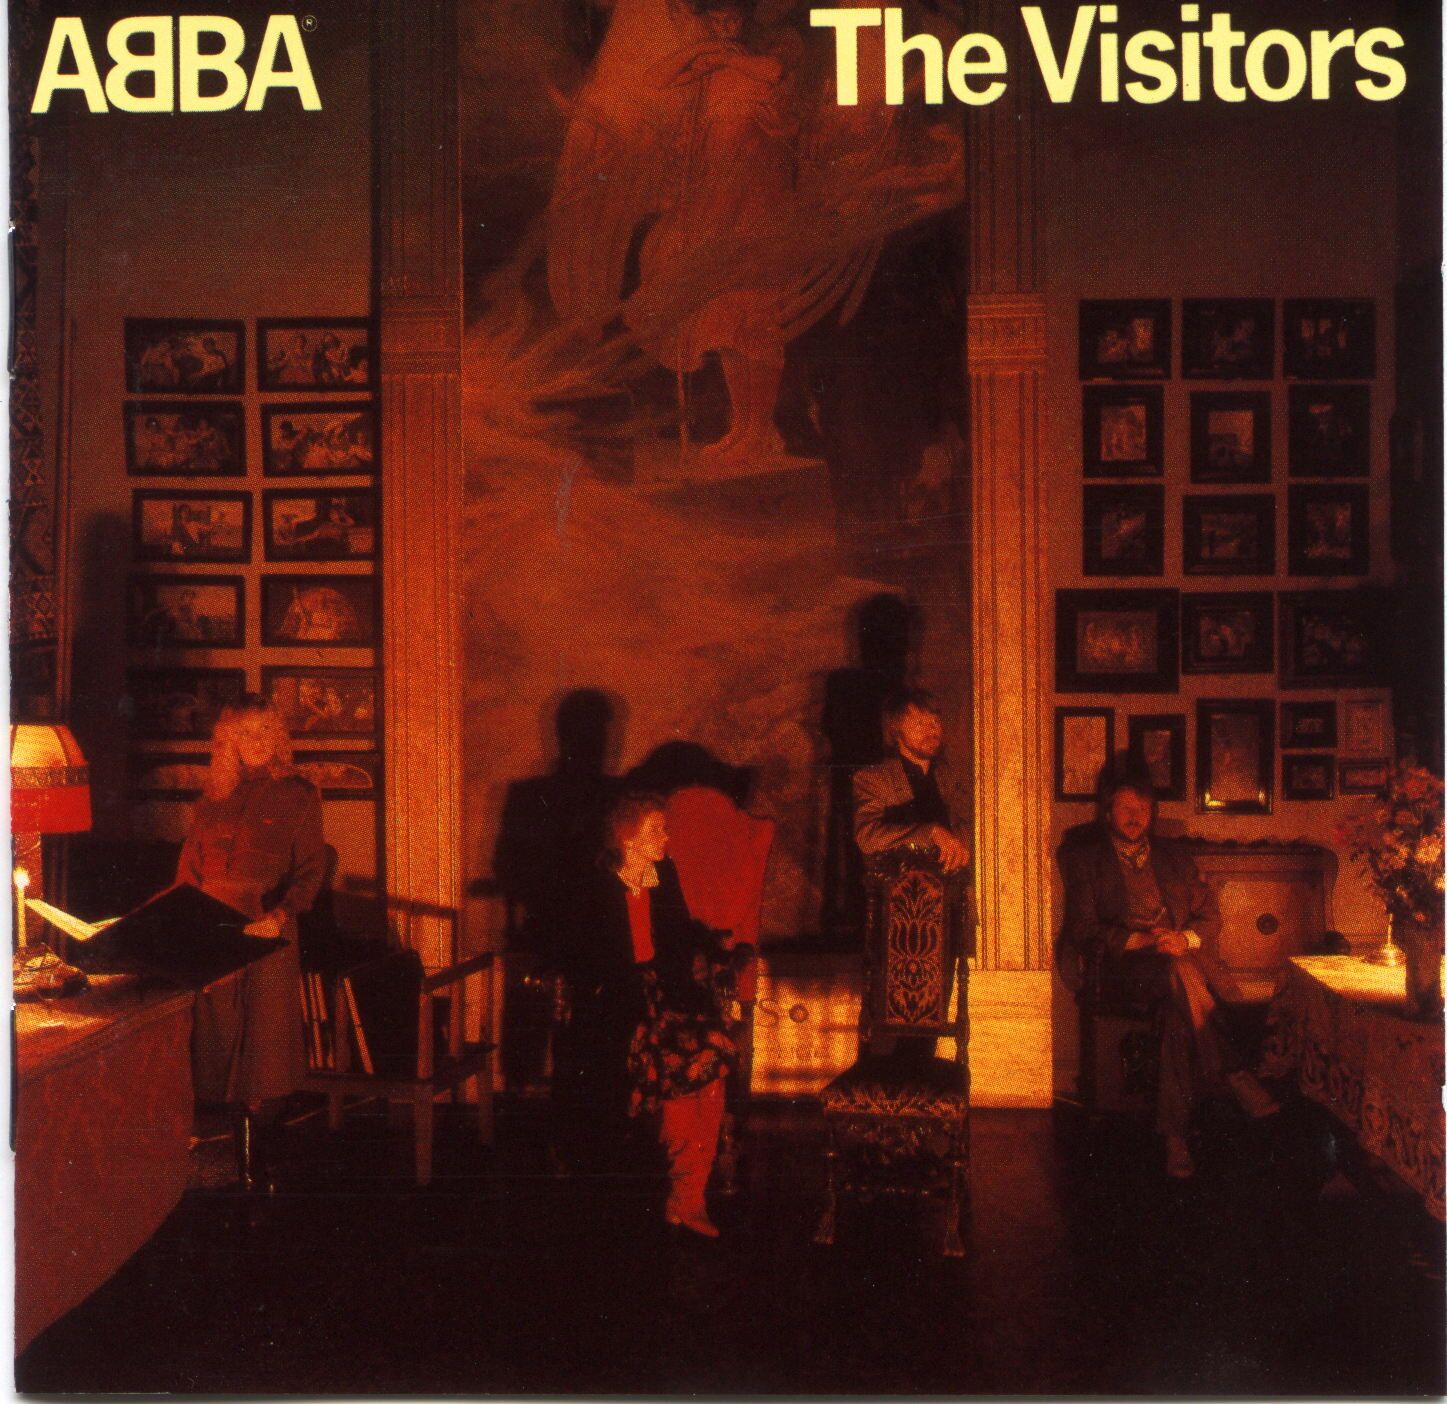 abba-the-visitors.jpg